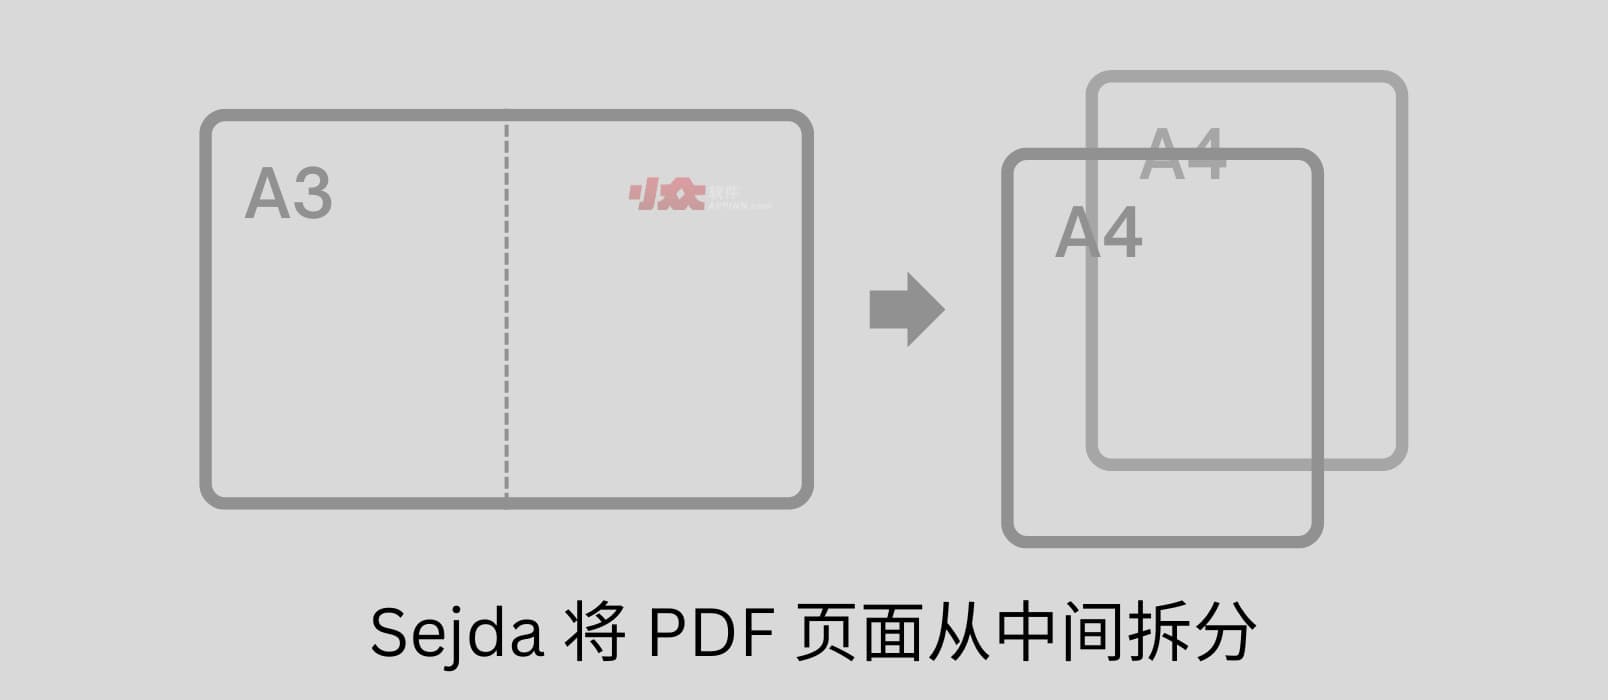 Sejda - 将 PDF 页面从中间拆分：A3 尺寸试卷切割为 A4 尺寸，方便打印